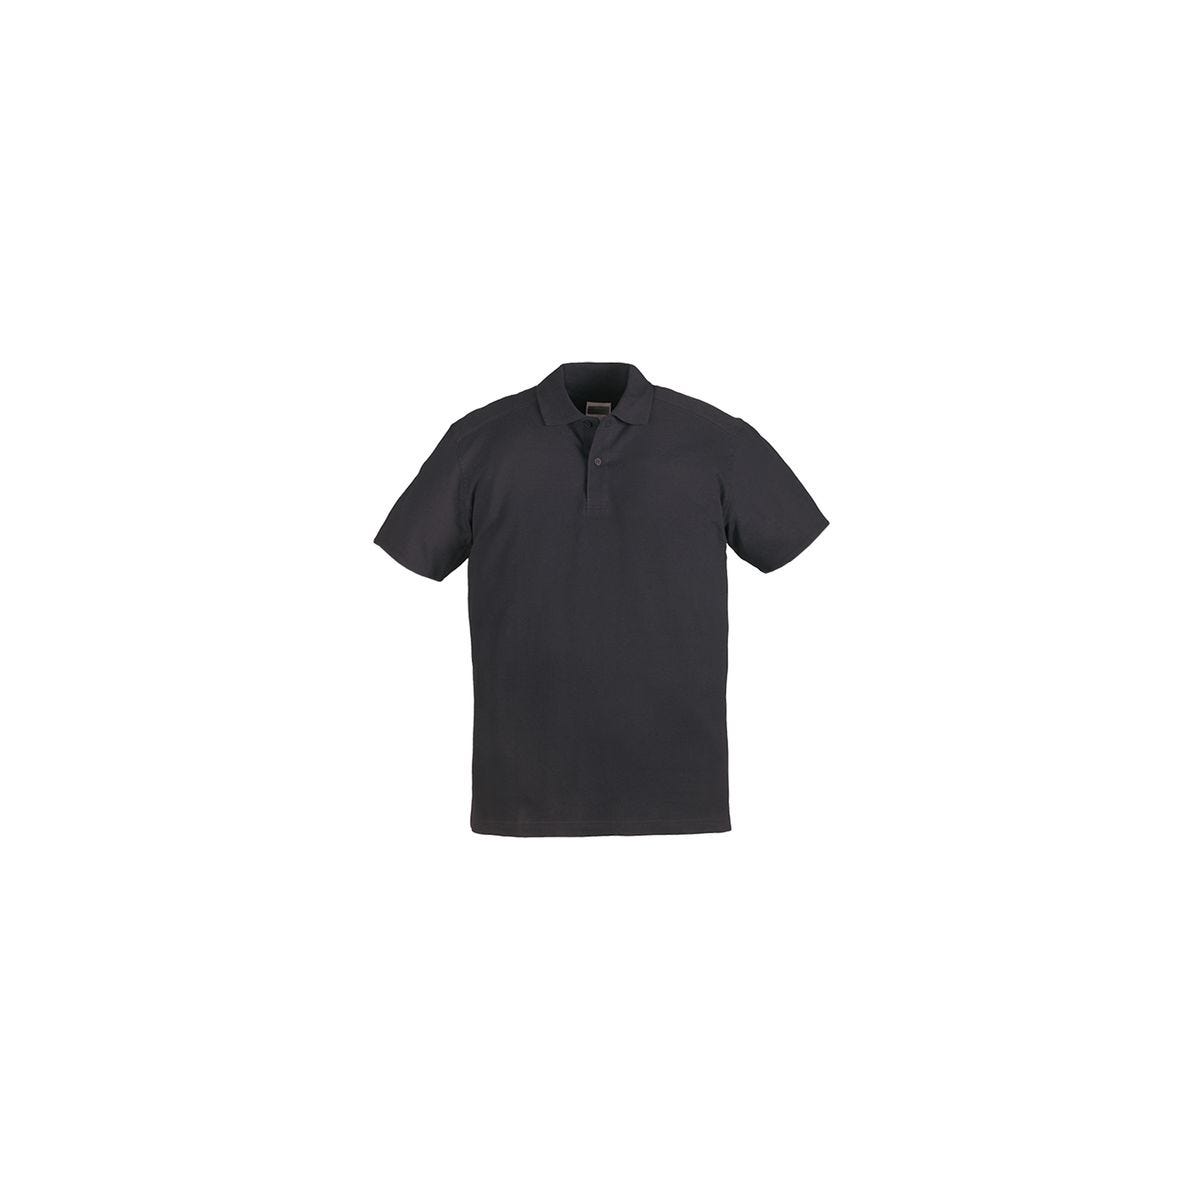 SAFARI Polo MC noir, 100% coton, 220g/m² - COVERGUARD - Taille L 0